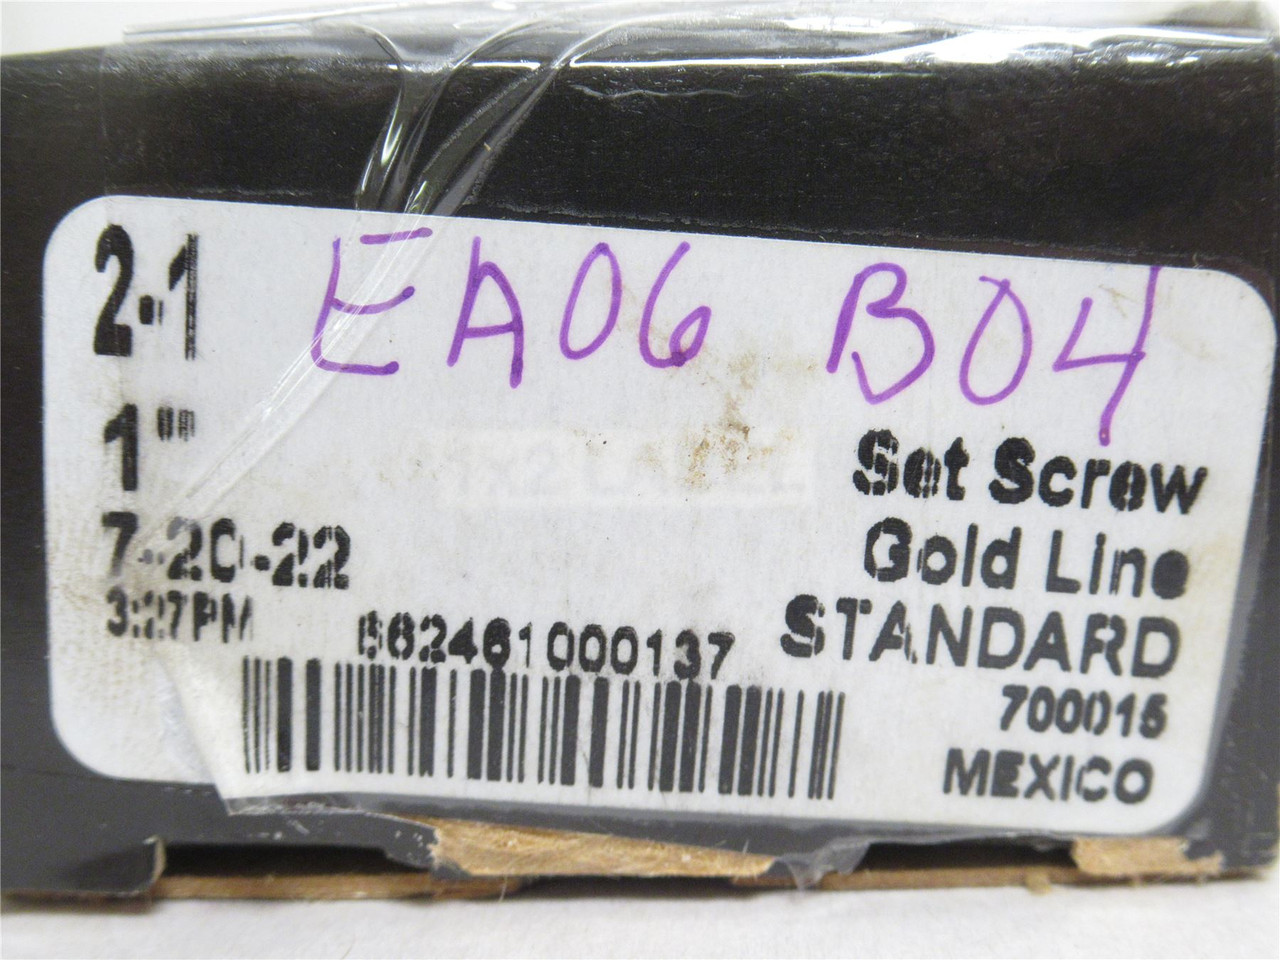 Sealmaster 45323; Insert Ball Bearing; 1"ID x 52mmOD